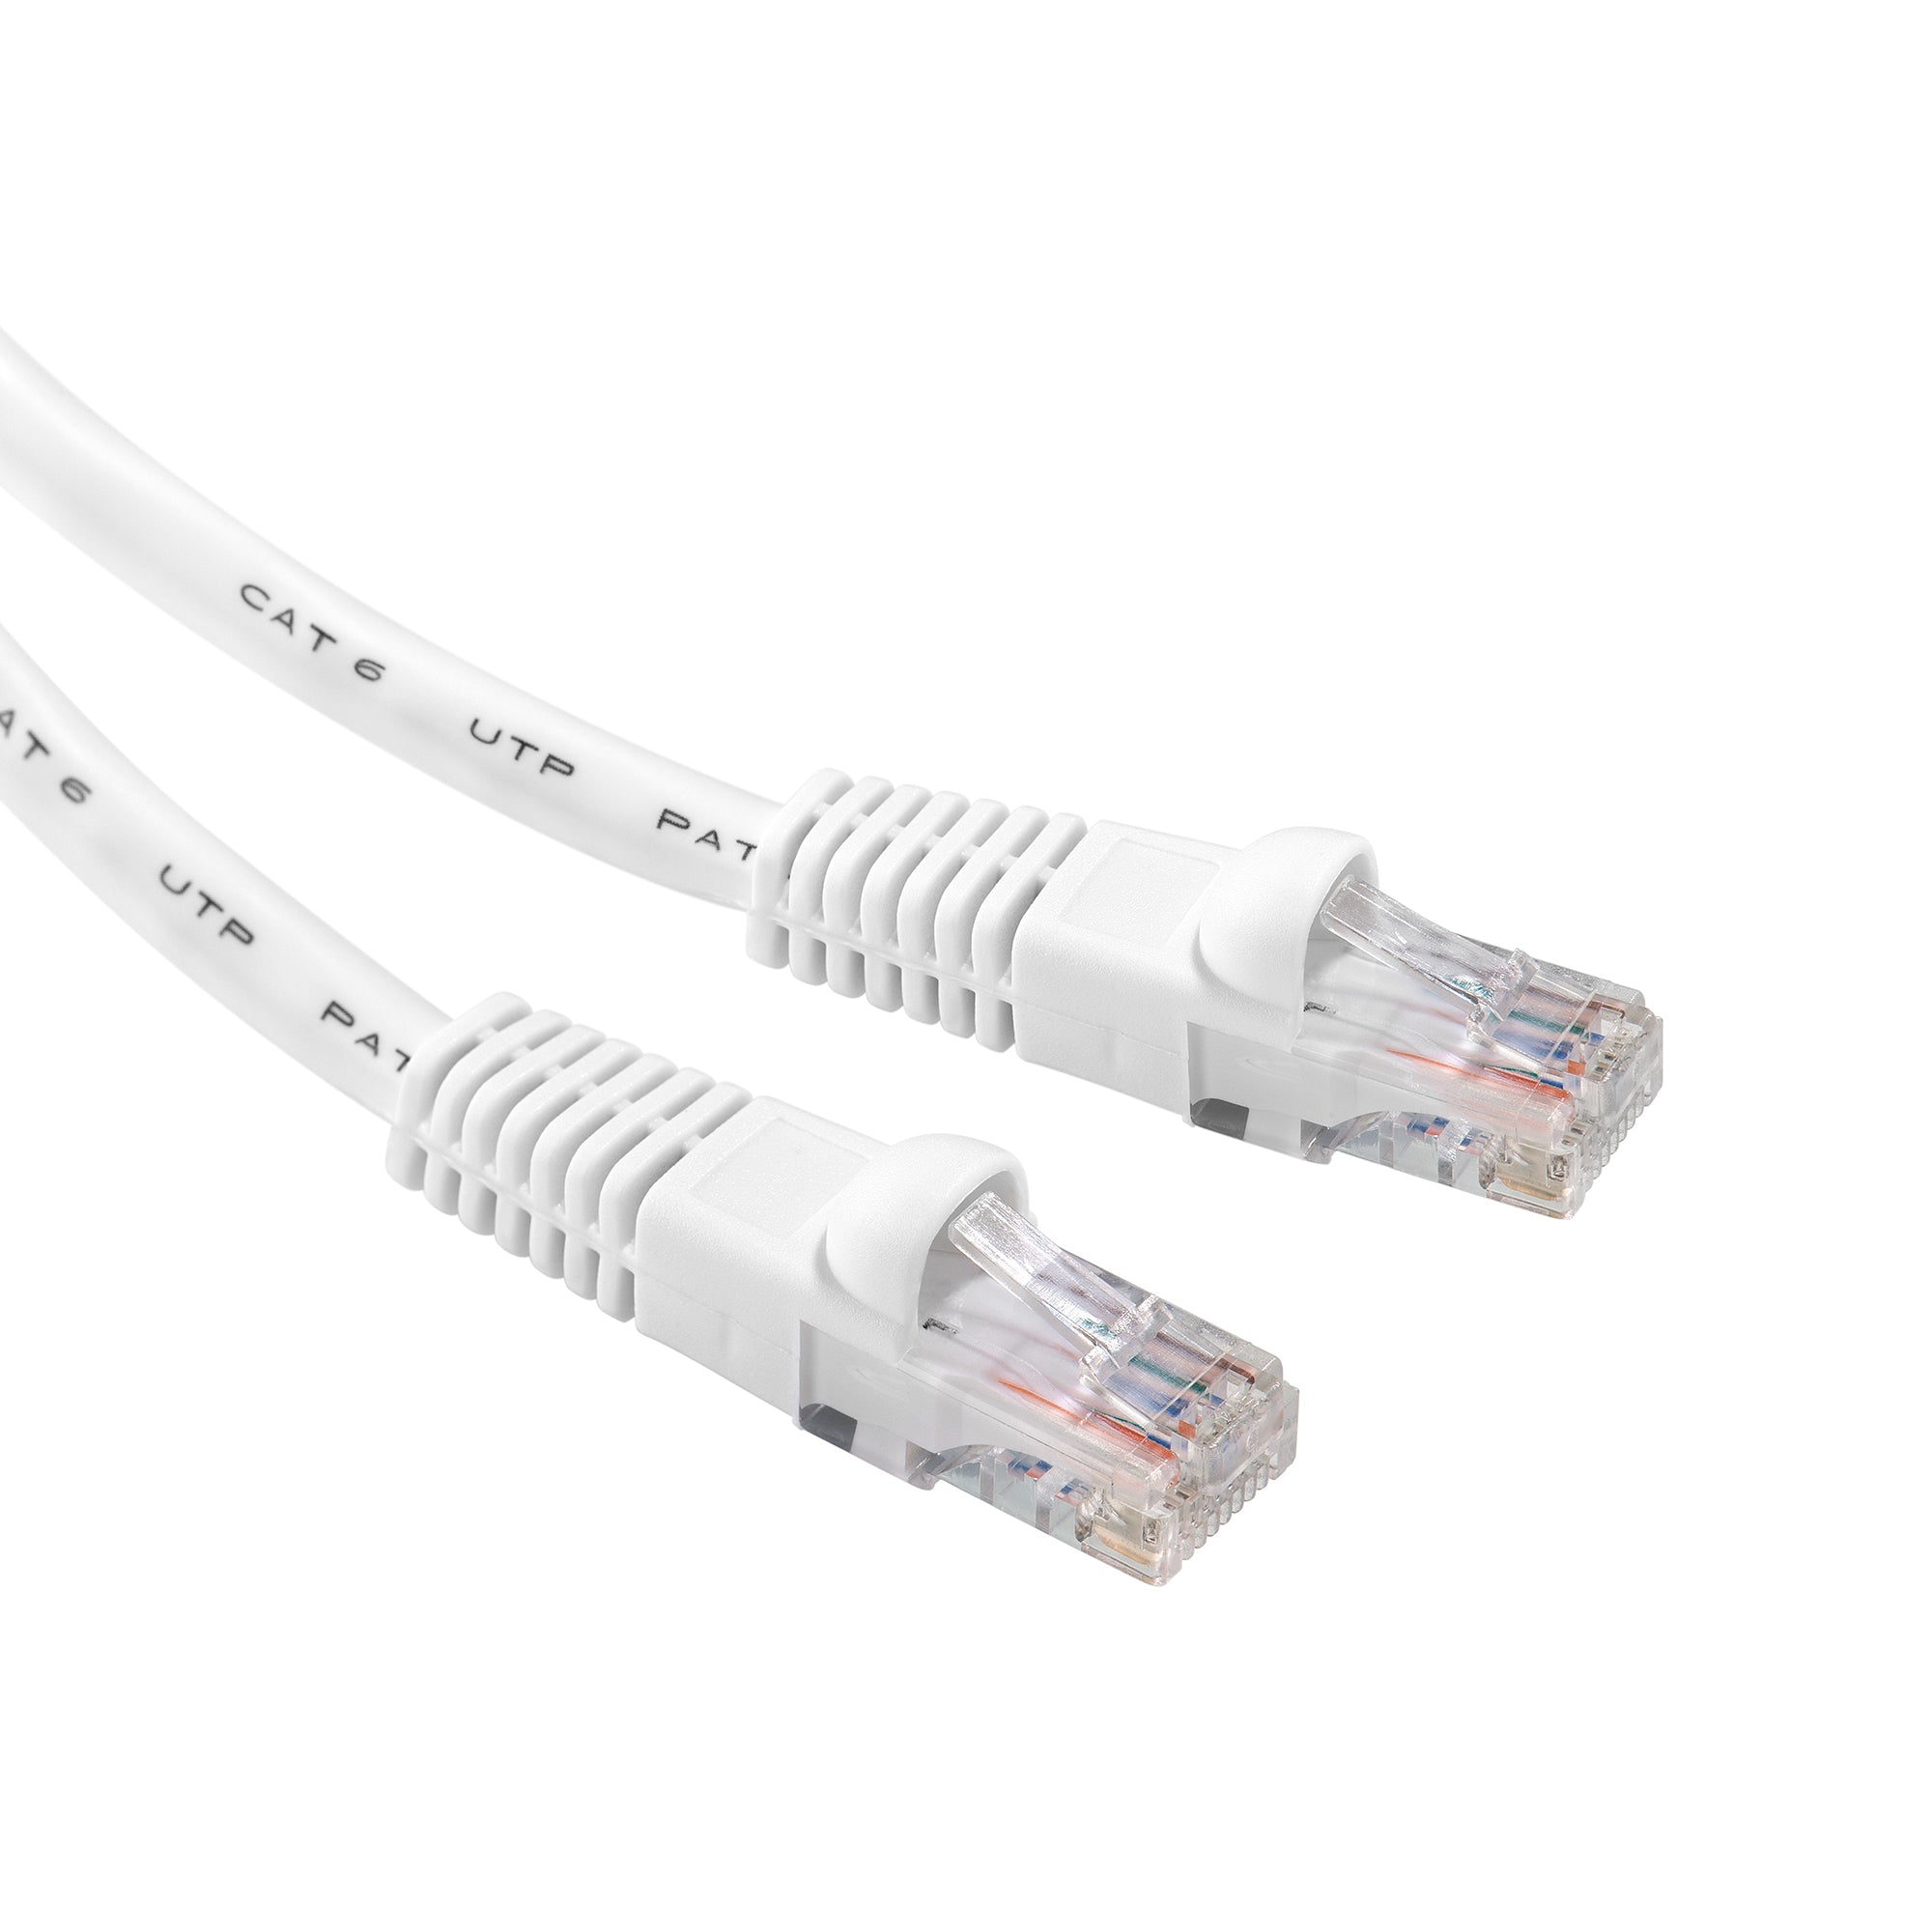 5m CAT6 RJ45 Ethernet Network Cable